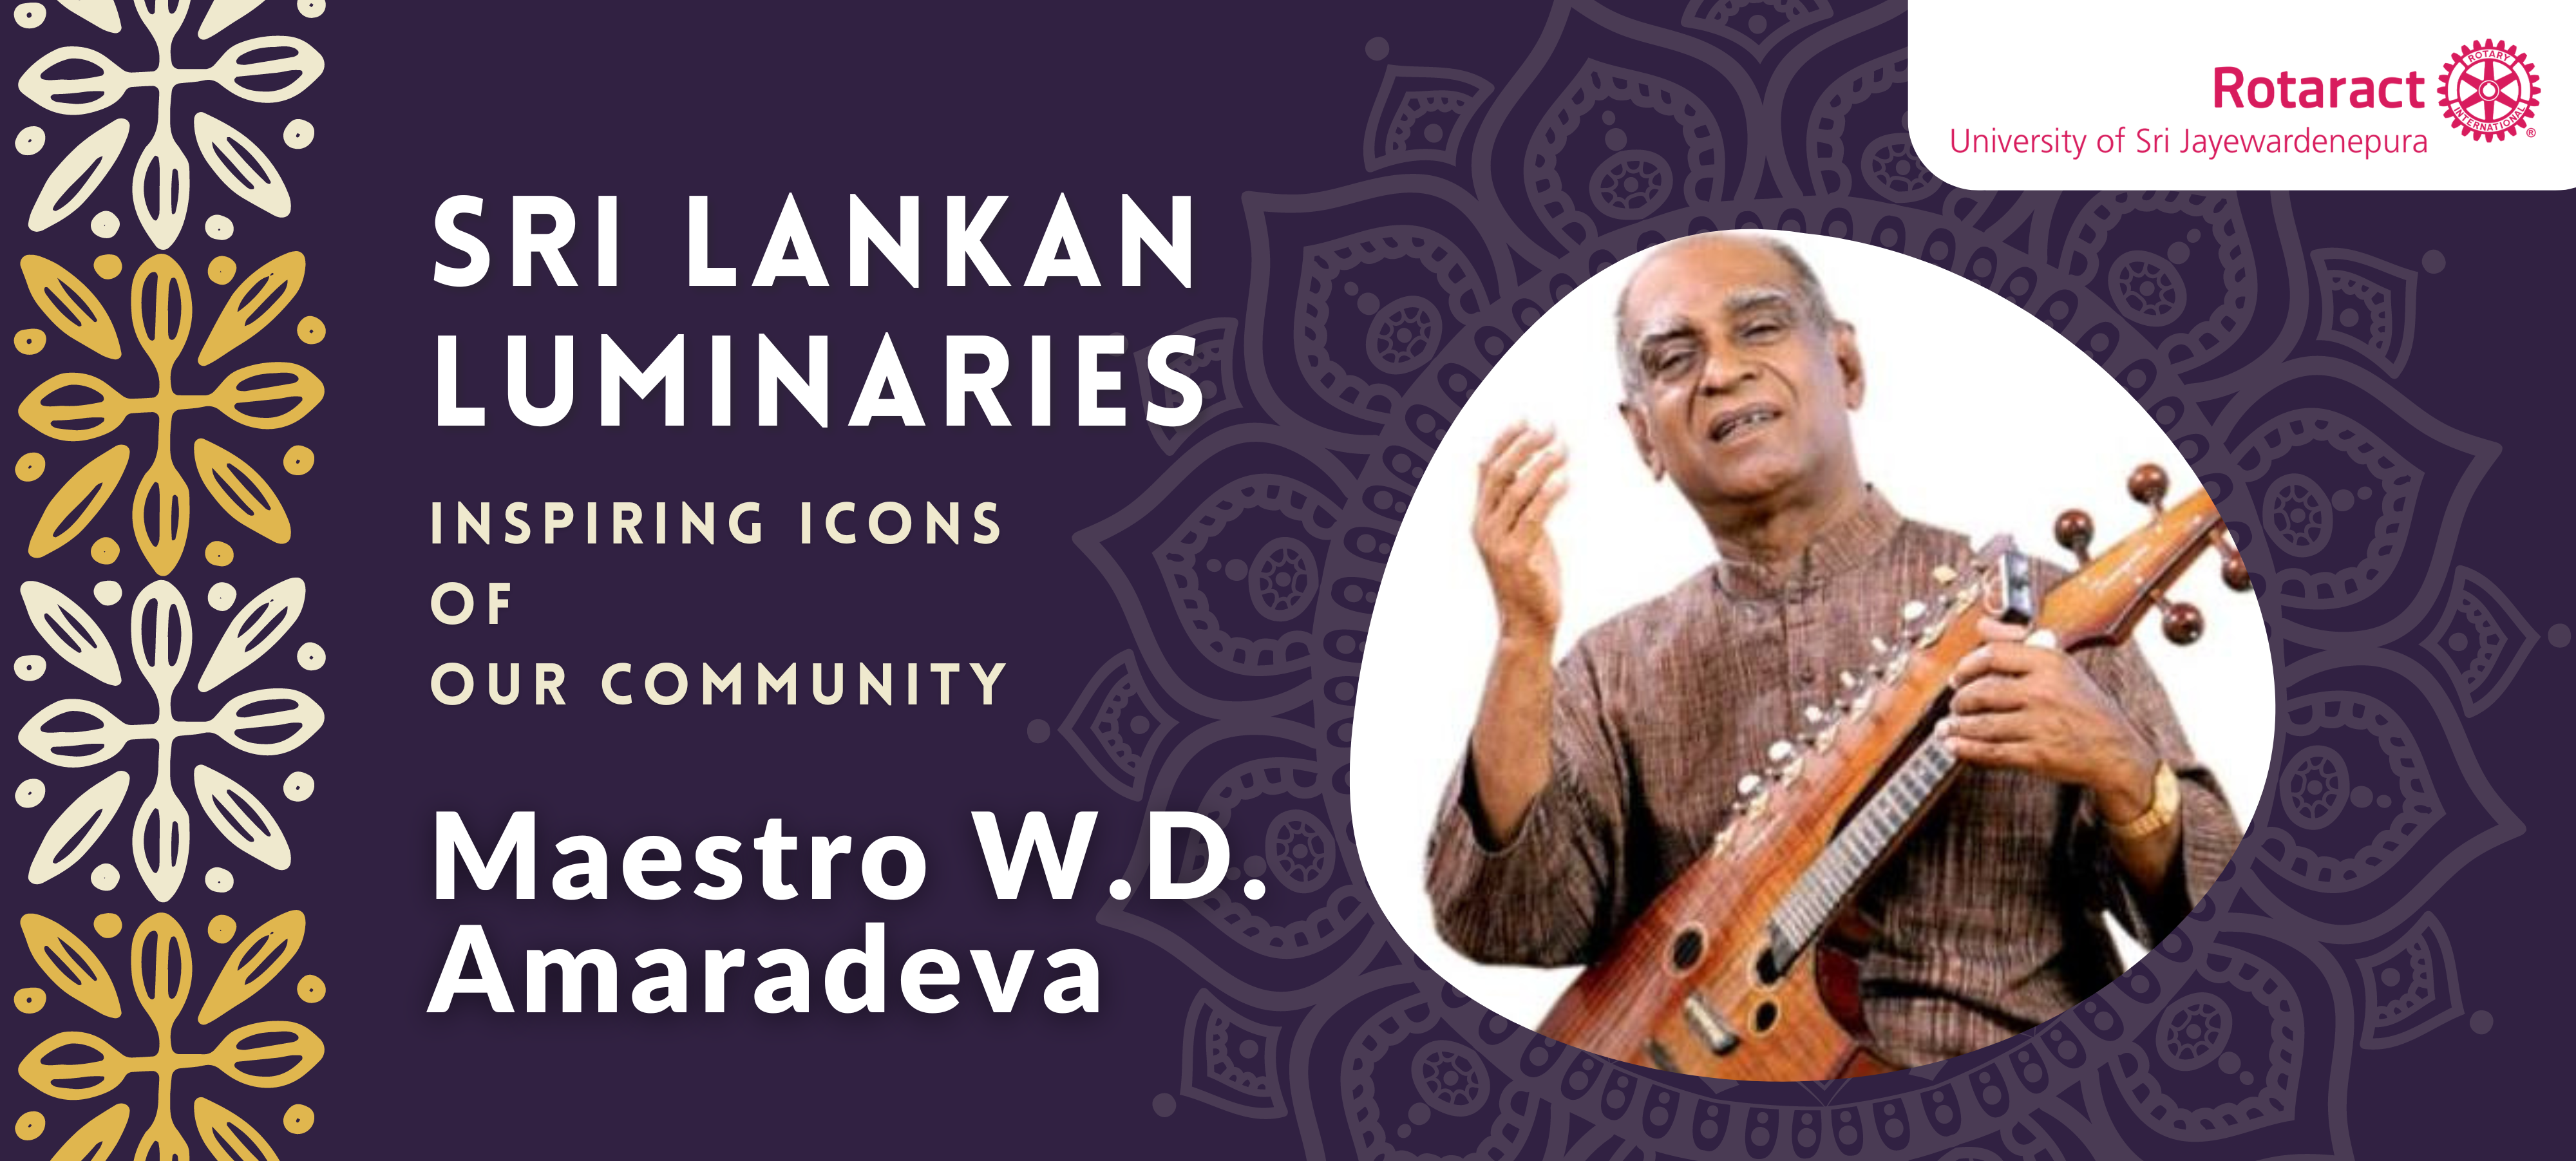 Sri Lankan Luminaries- Maestro W. D. Amaradeva - Official Blog of ...